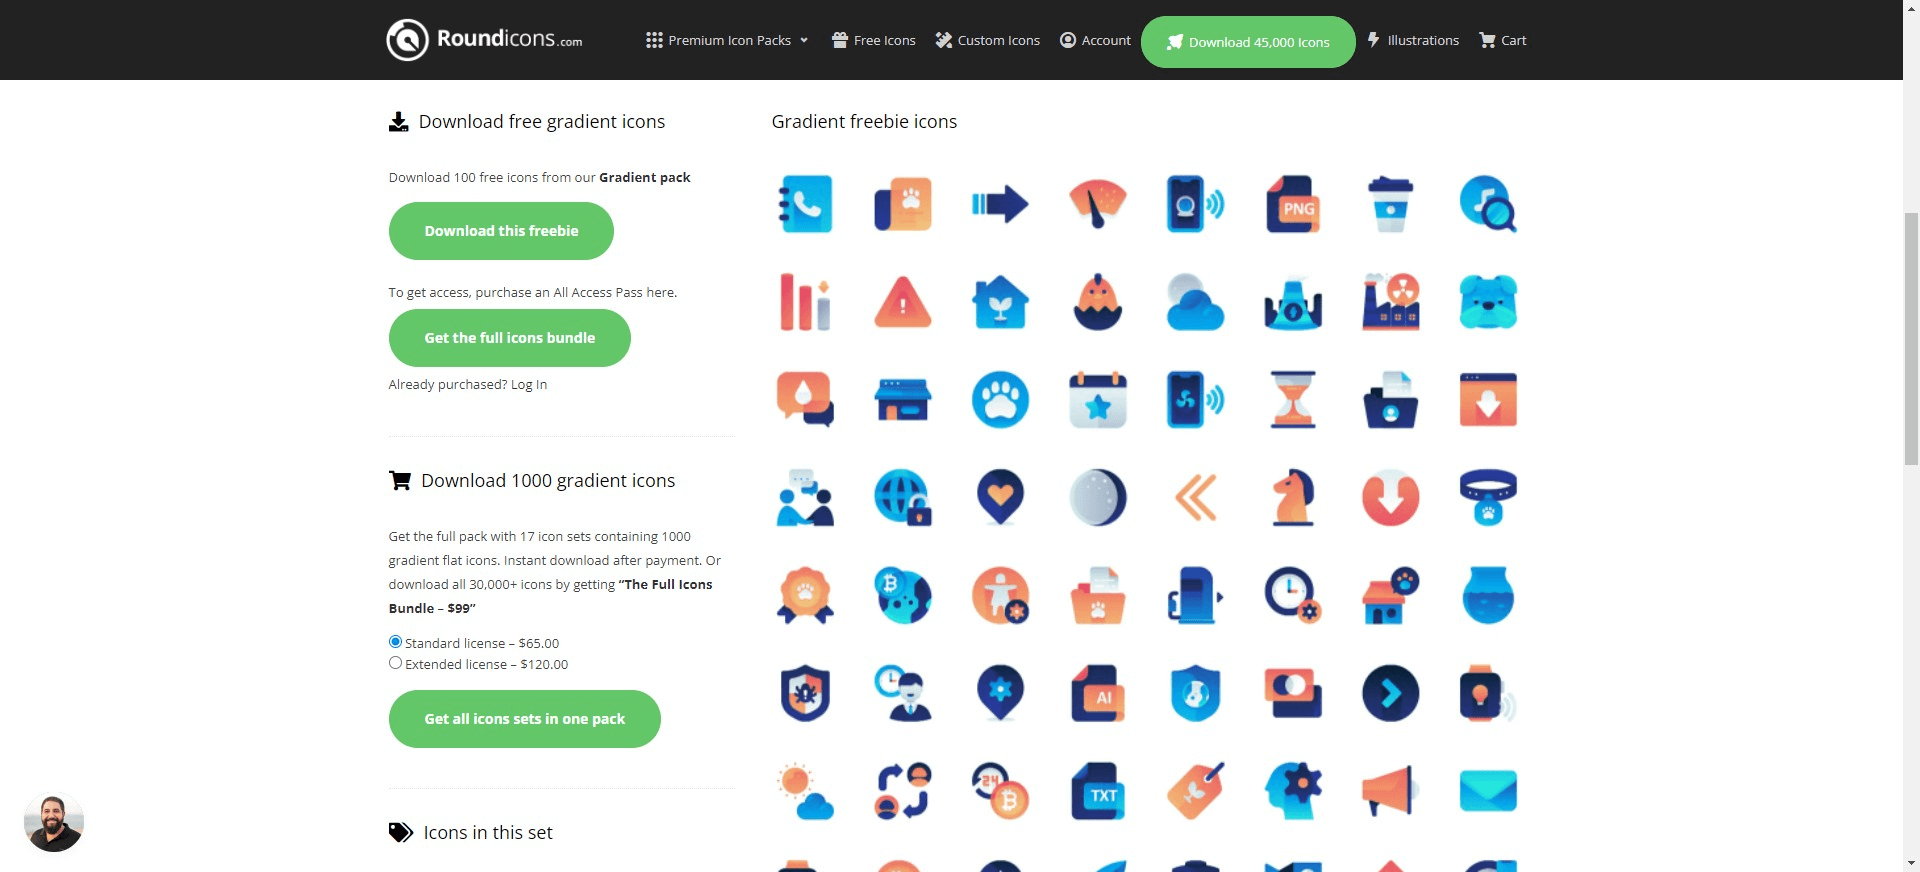 Gradient Freebie Icons Landing Page